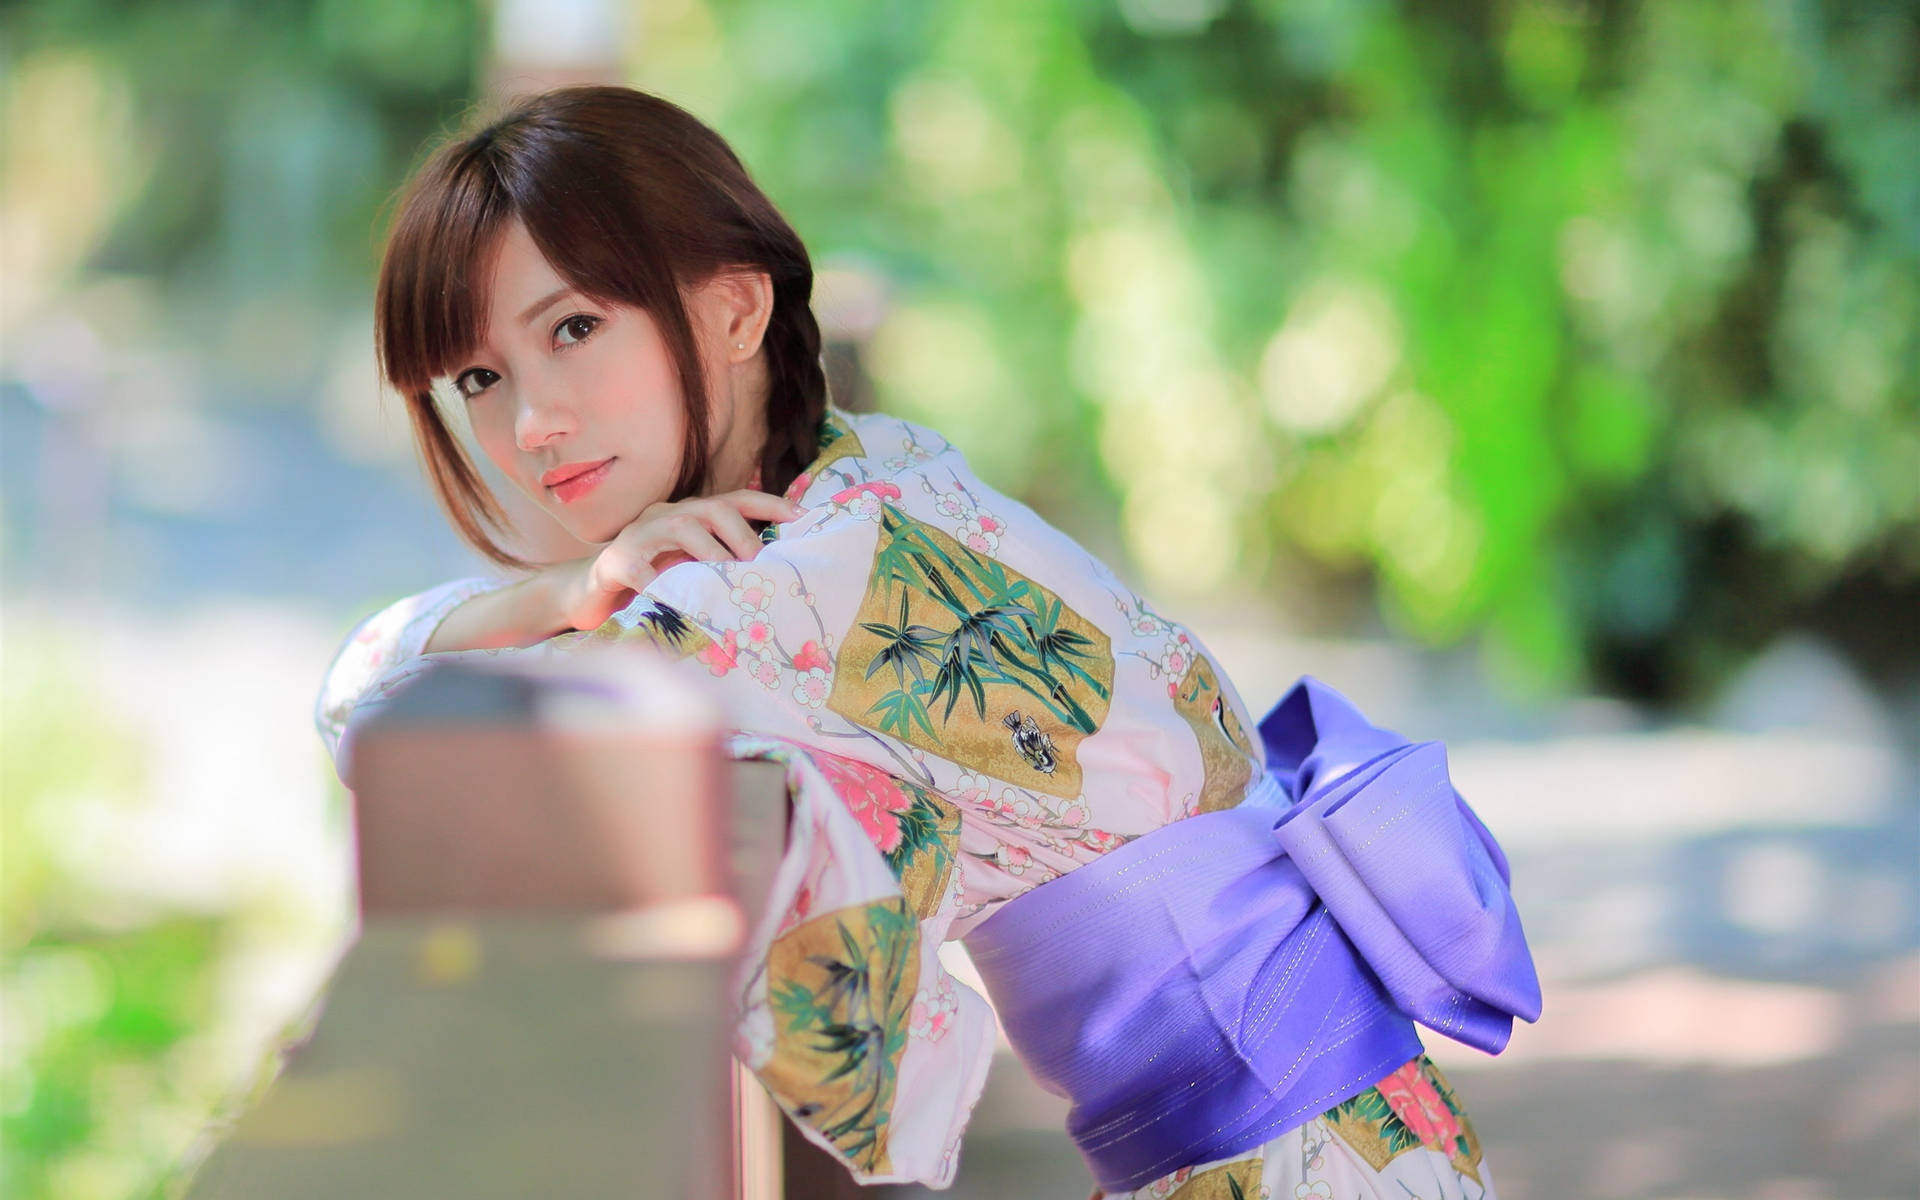 Beautiful Japanese Girl Outdoors Background